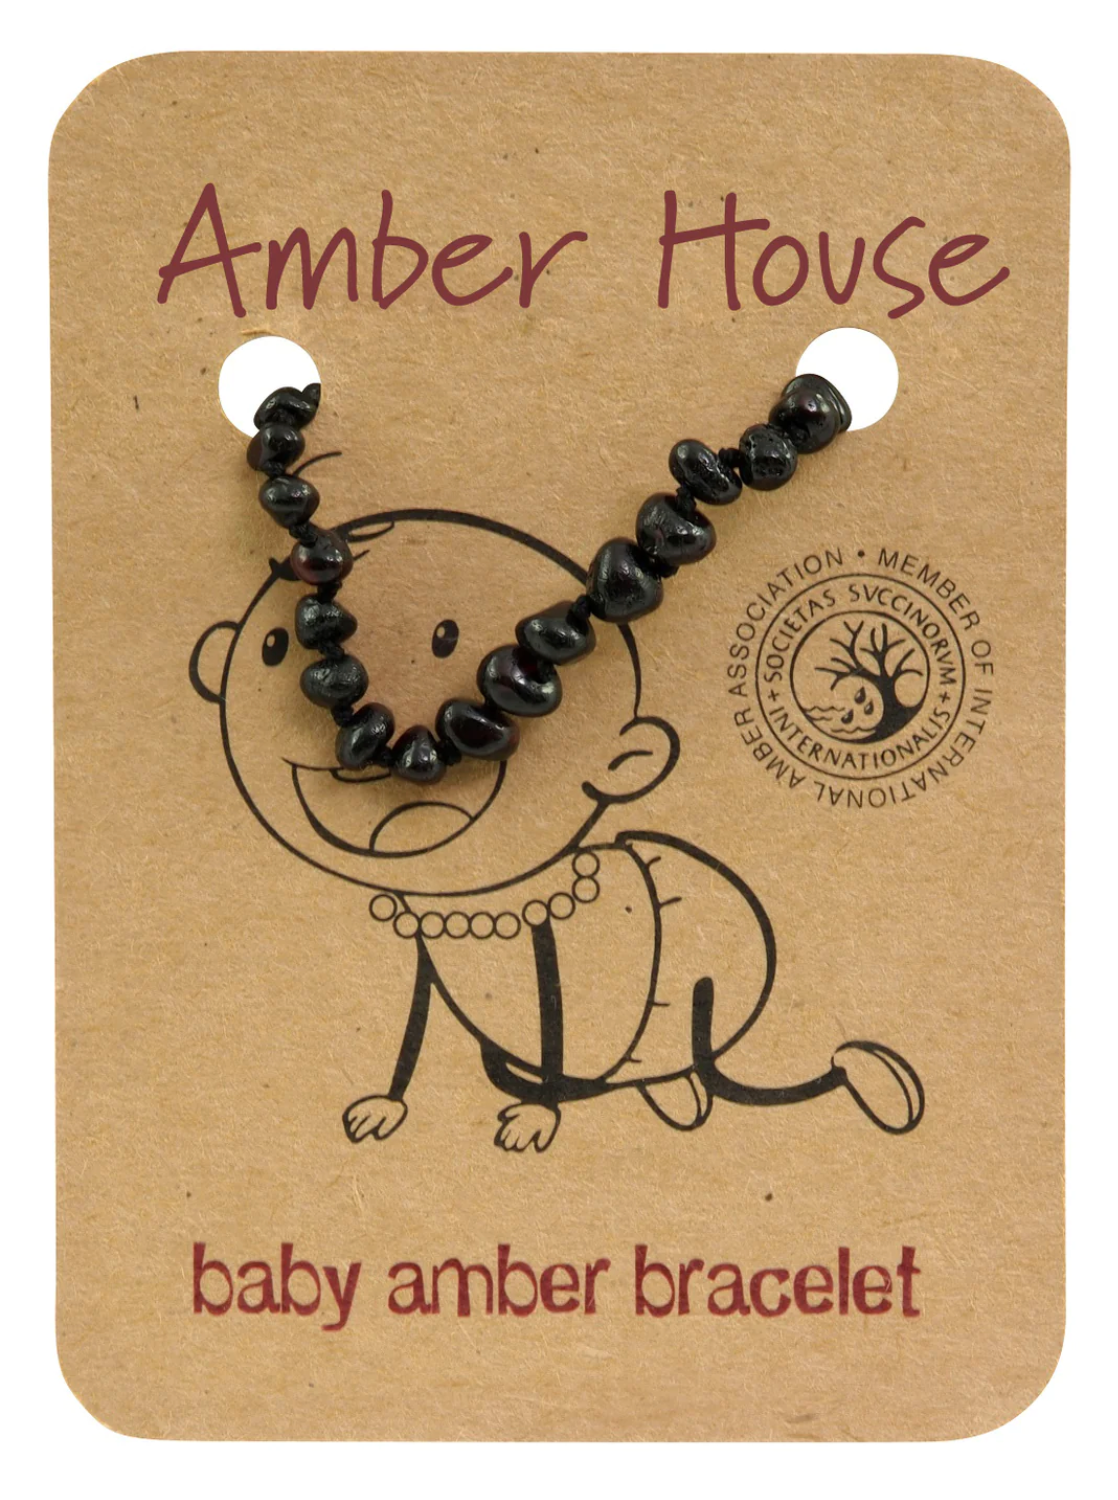 Baby Amber Bracelet